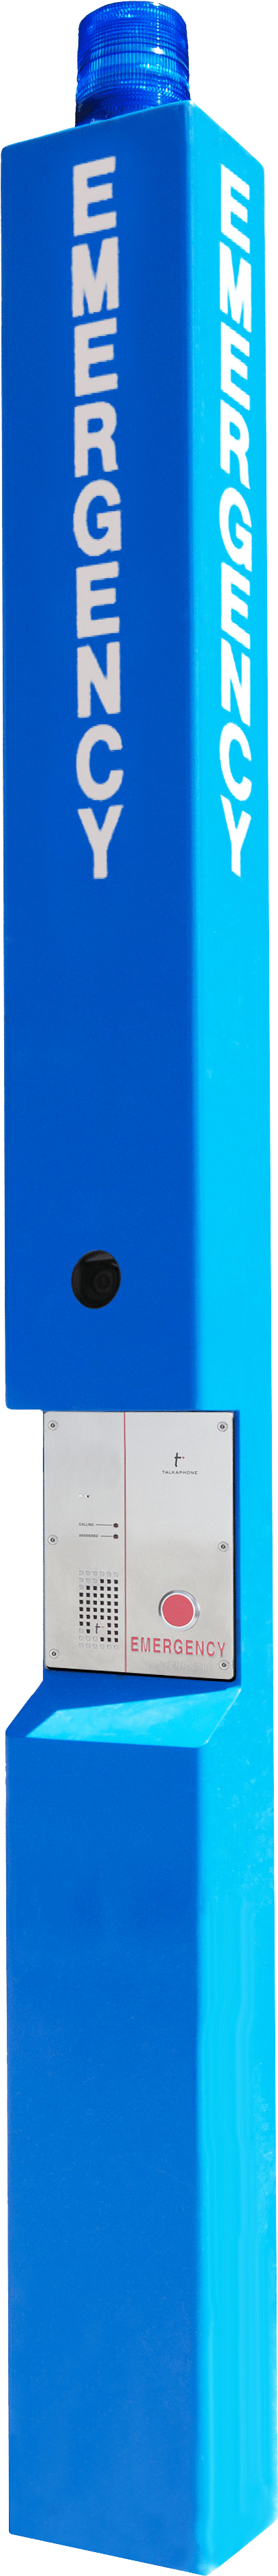 Blue Light Phone Tower, Fixed Camera Ready